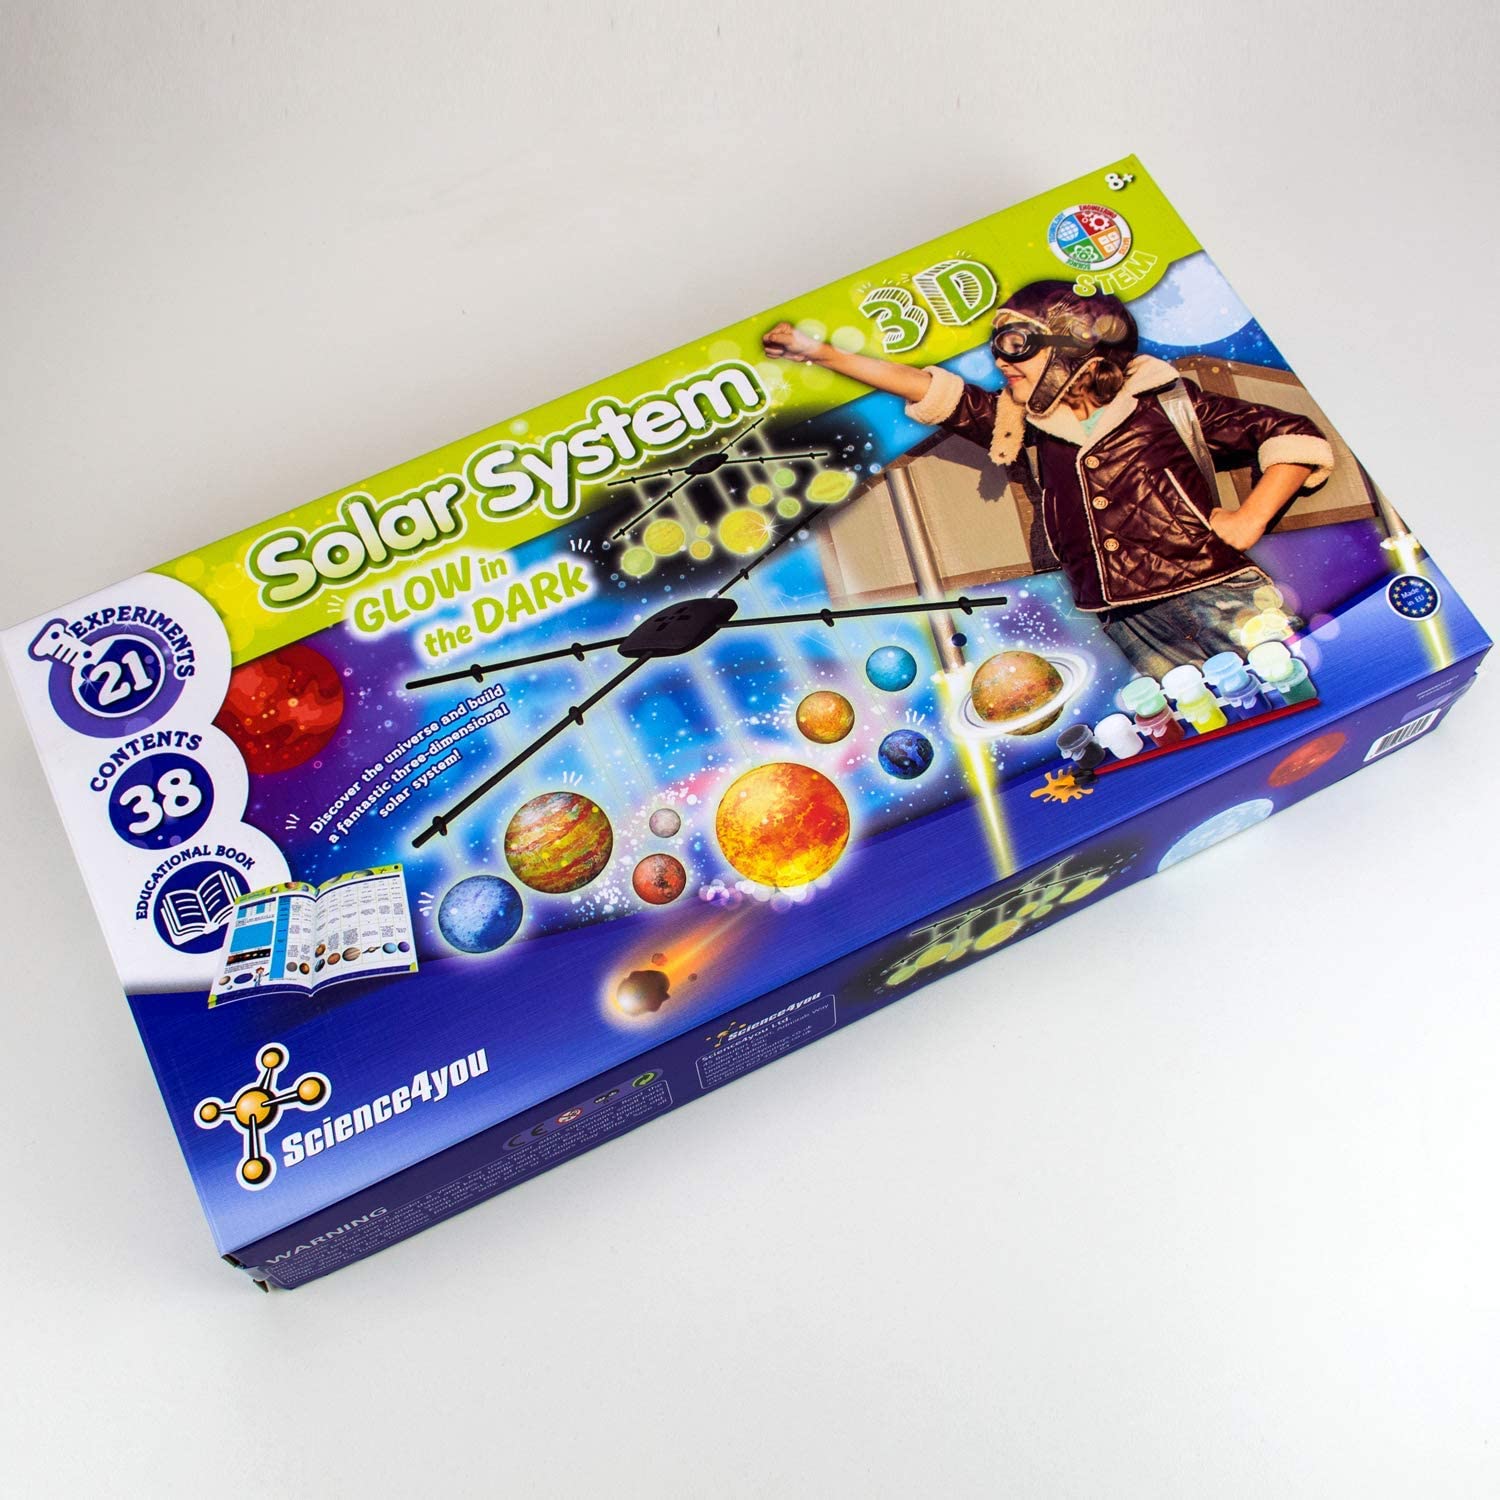 Solar System 3D GITD STEM Science Toy kit for Kids Aged 8+, 